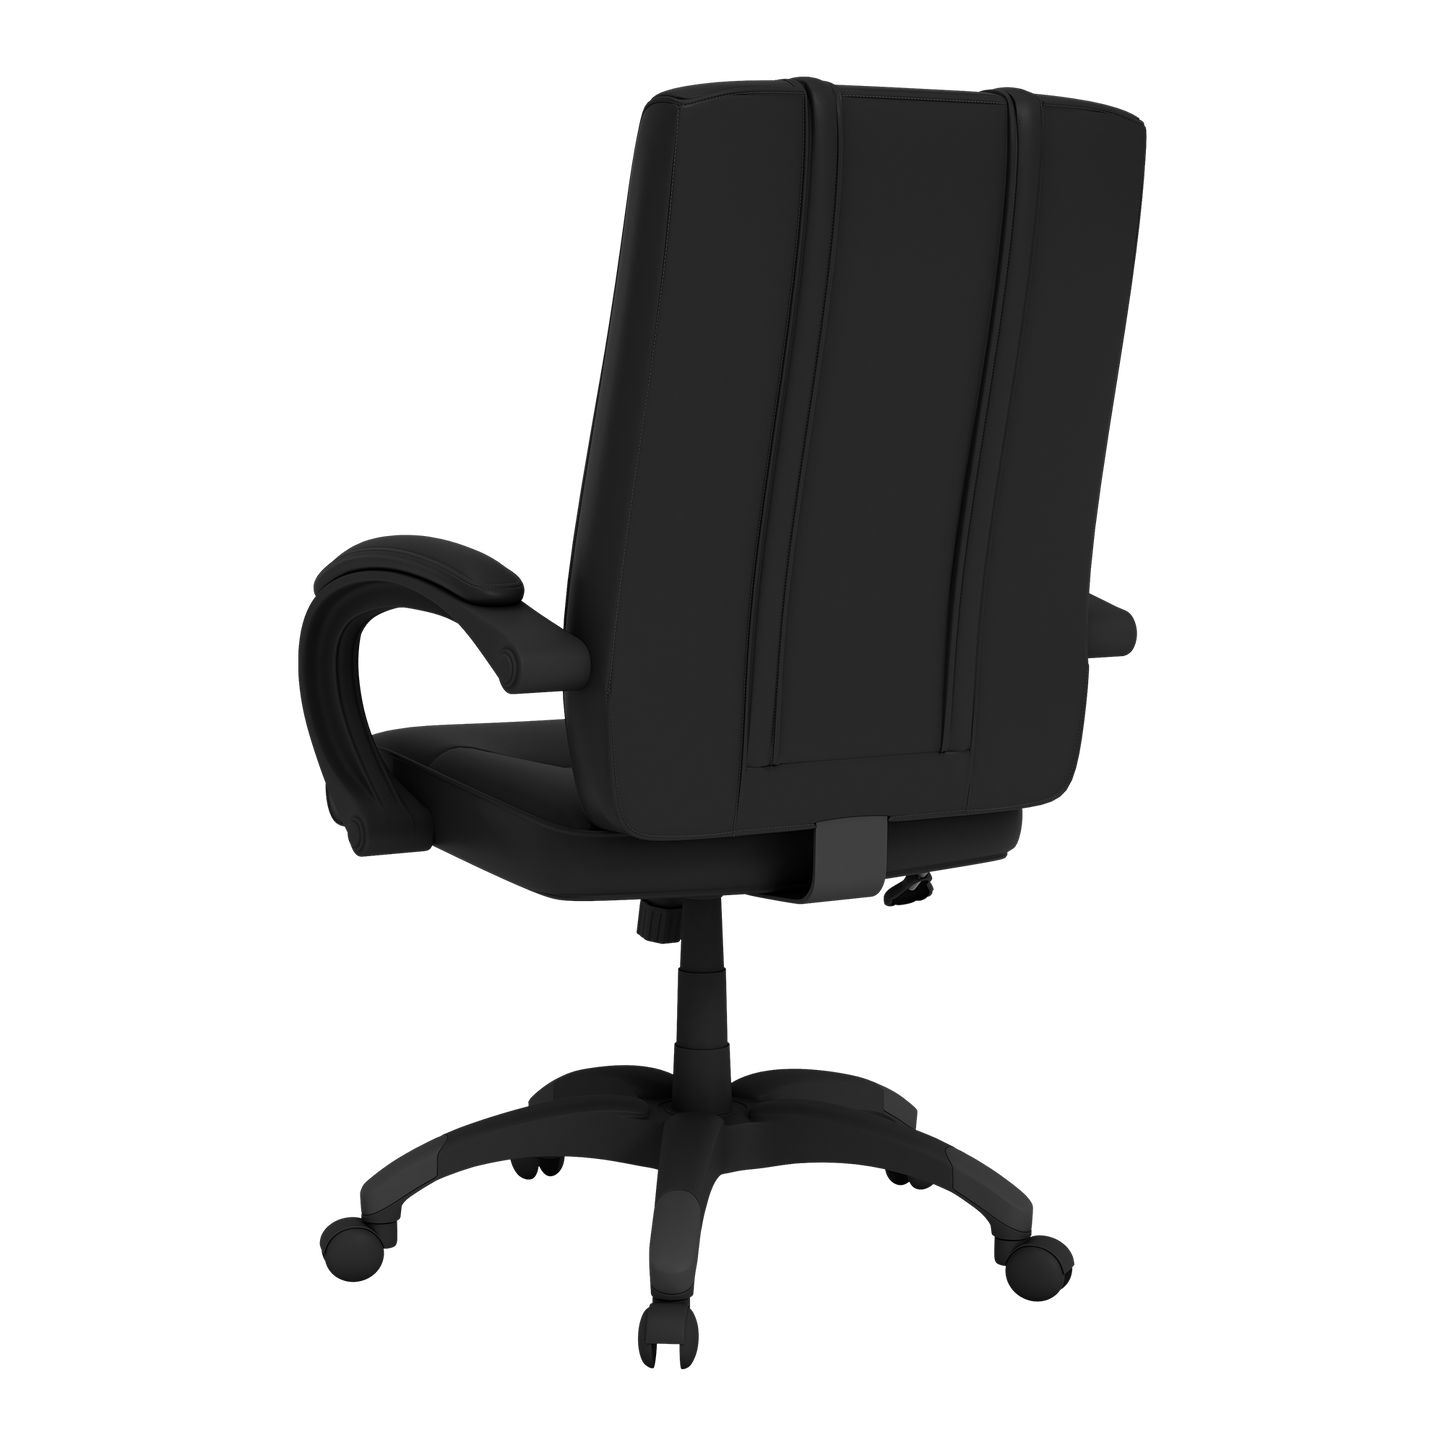 Office Chair 1000 with Arizona Wildcats Logo